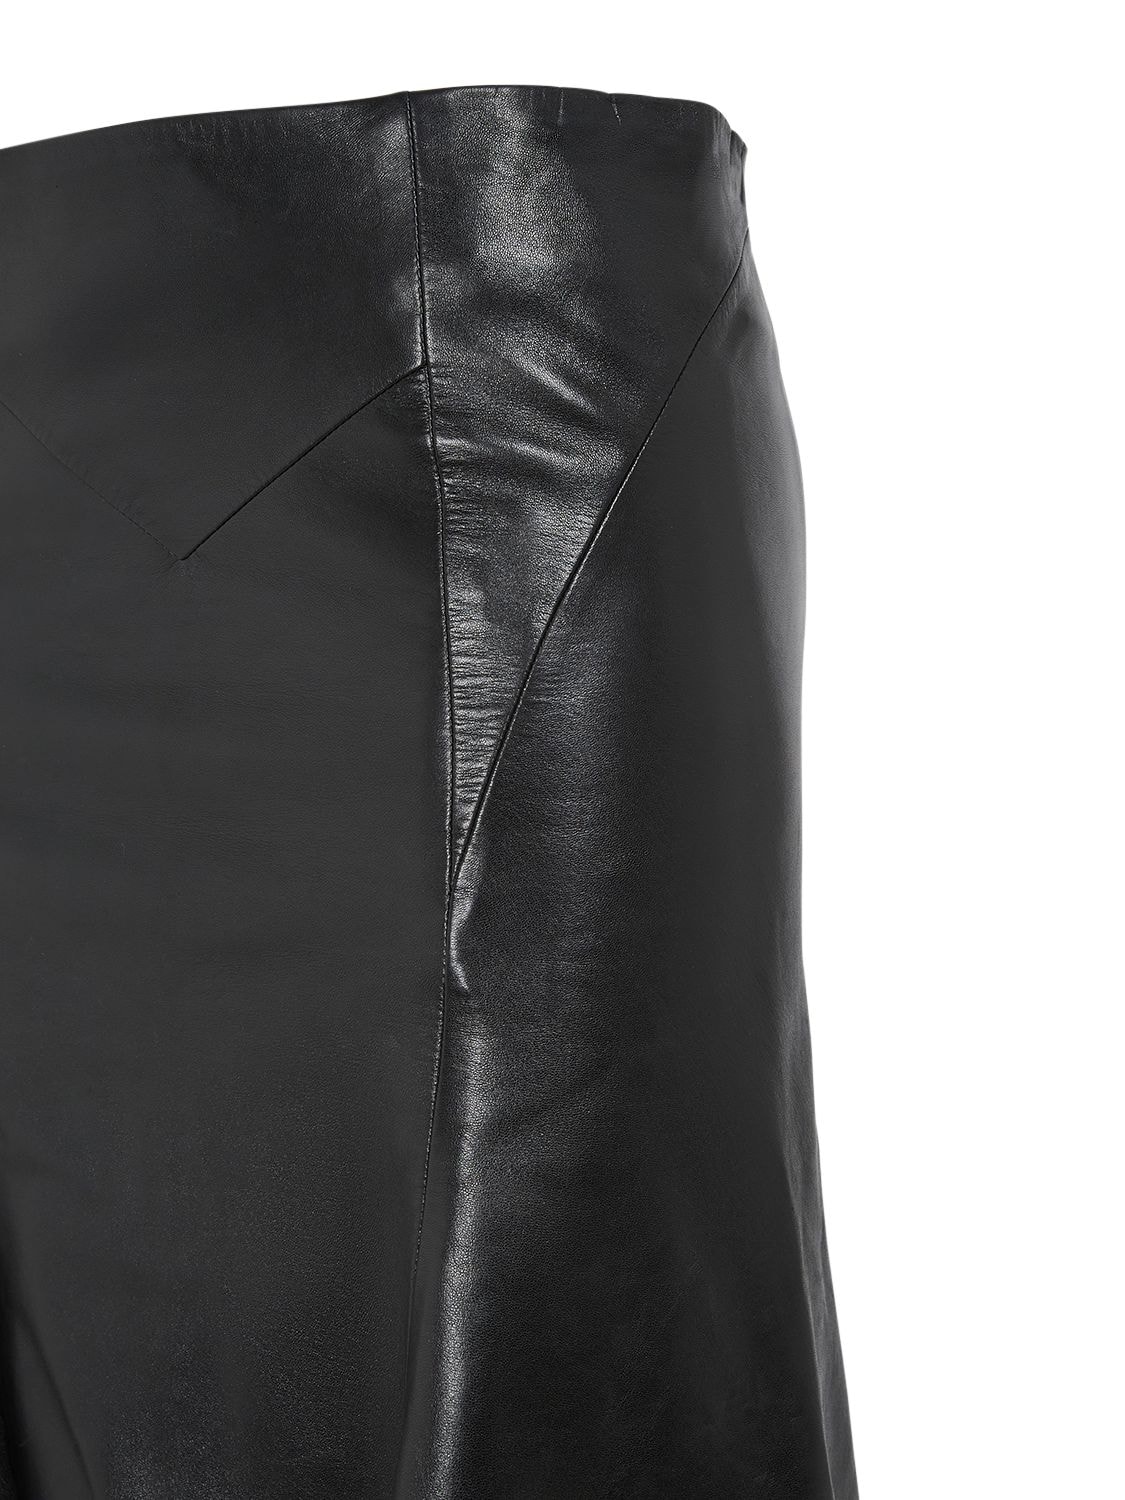 Marant Jill Leather Midi In Black | ModeSens